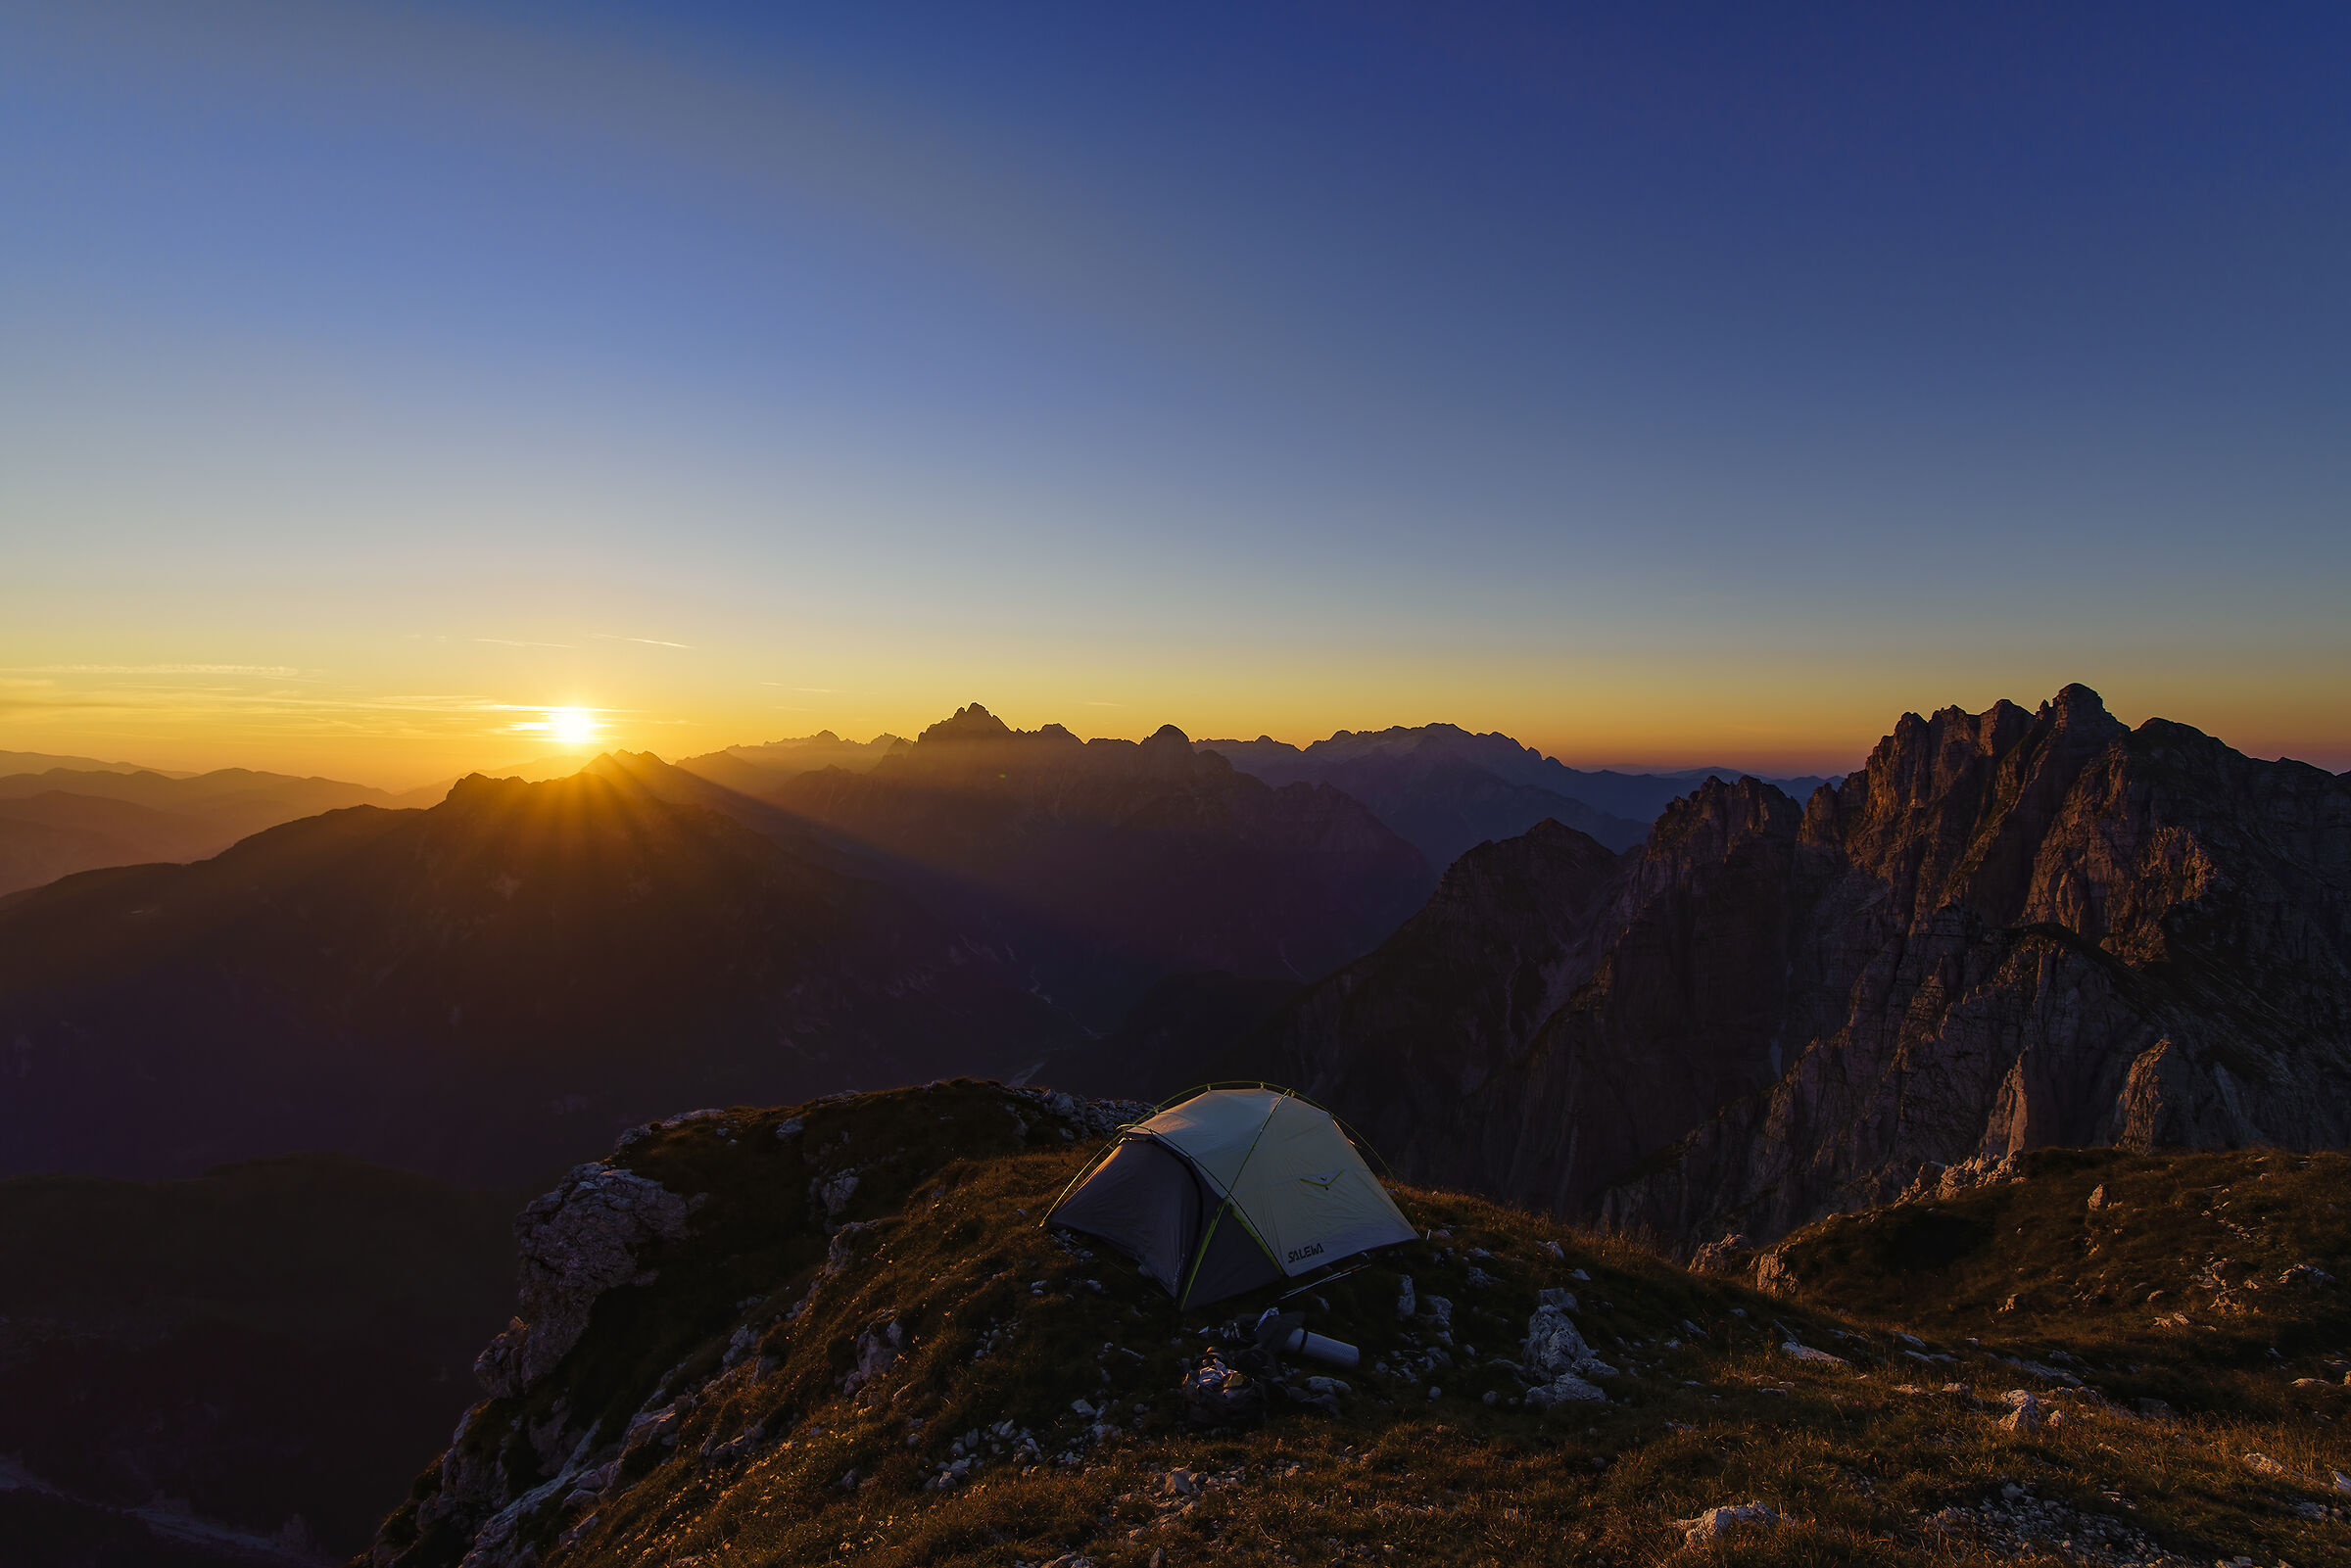 Julian Alps sunrise at high altitude...